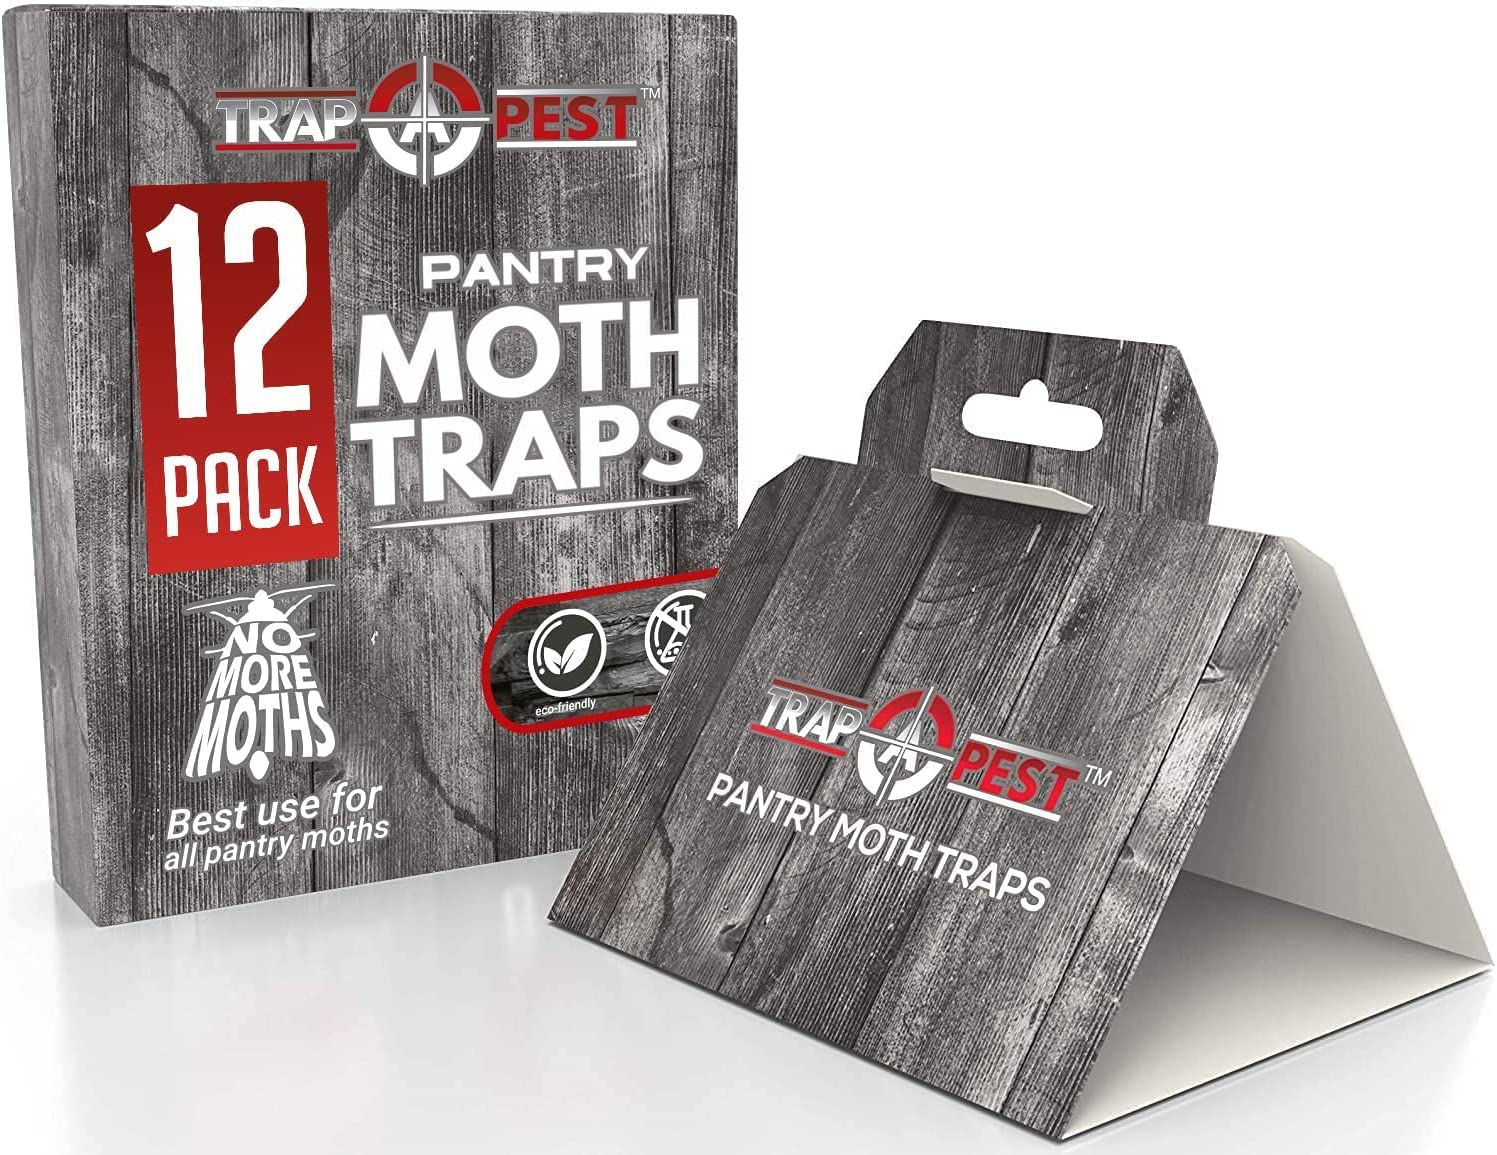 pantry moth trap, clothes moth trap